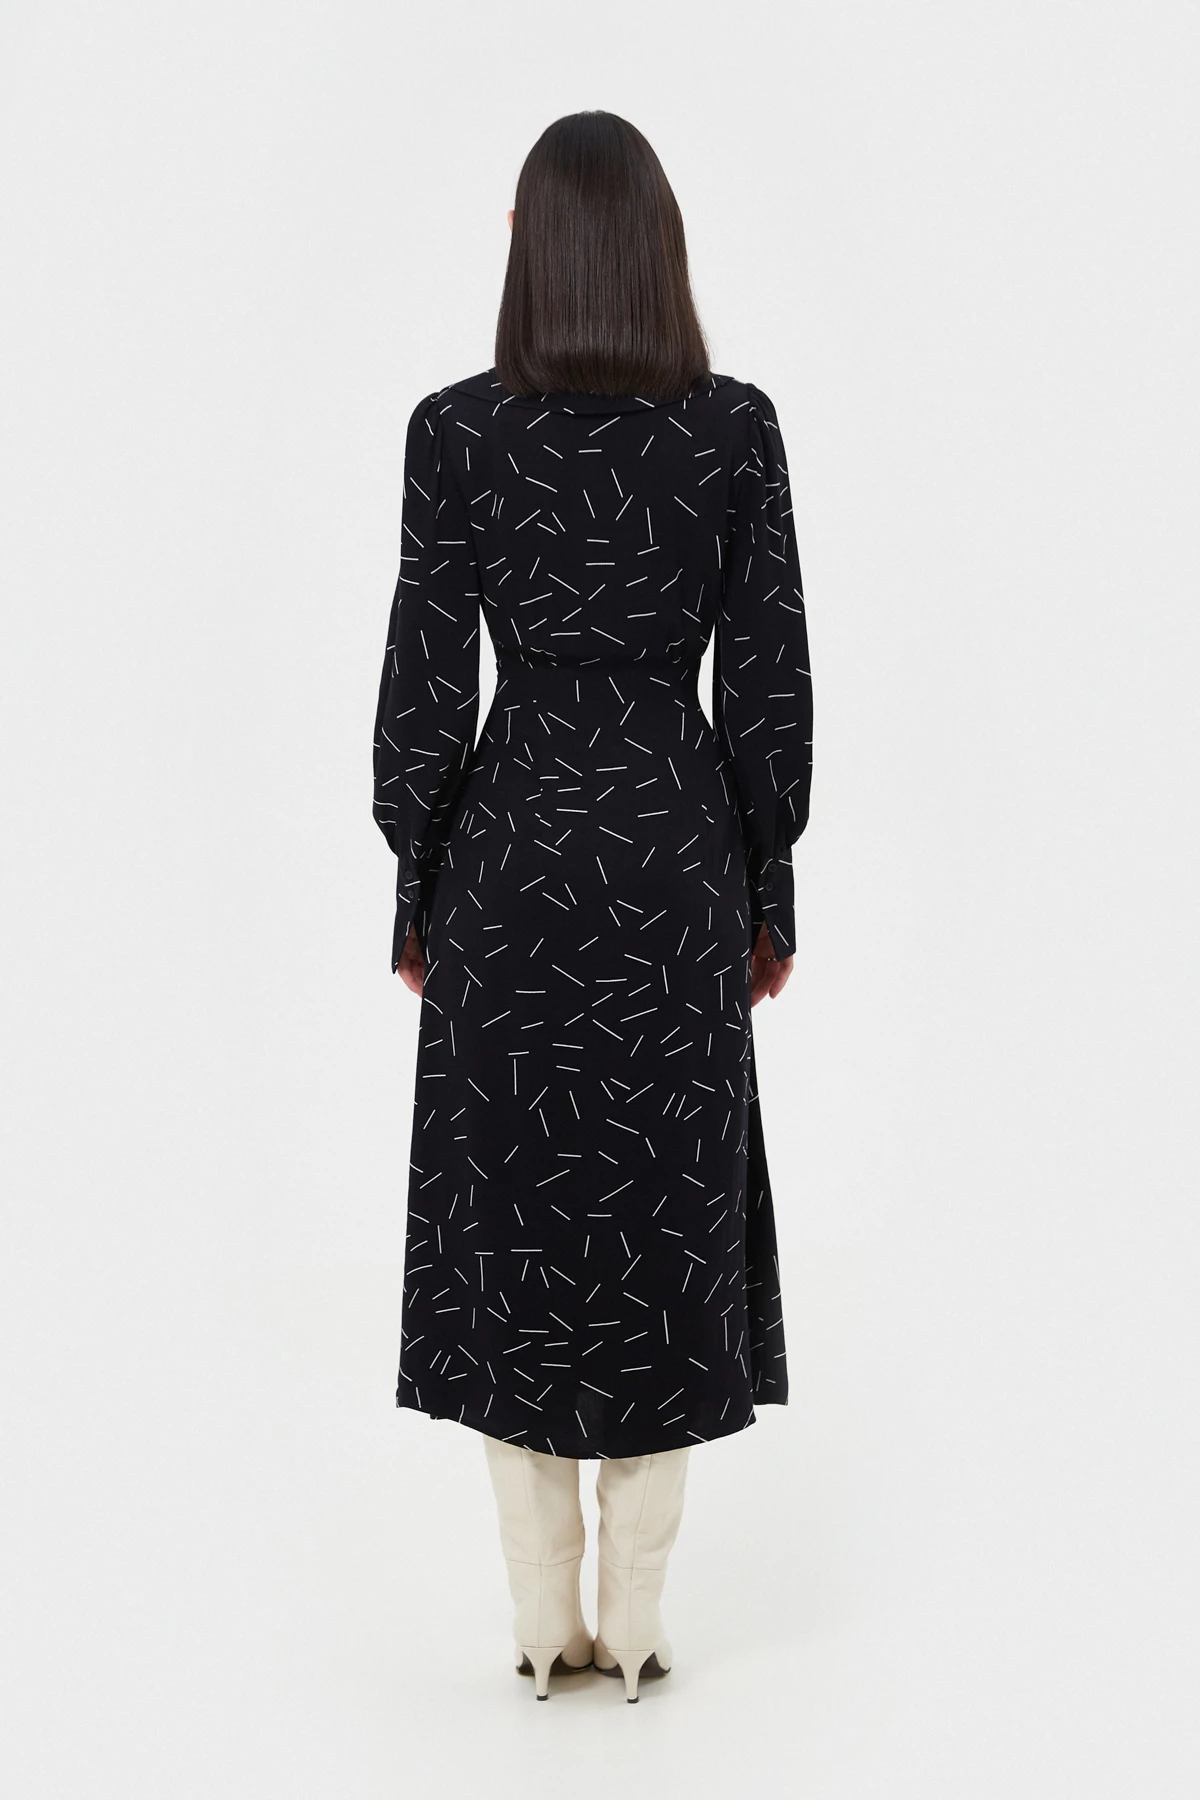 Black viscose midi dress in geometric print, photo 5